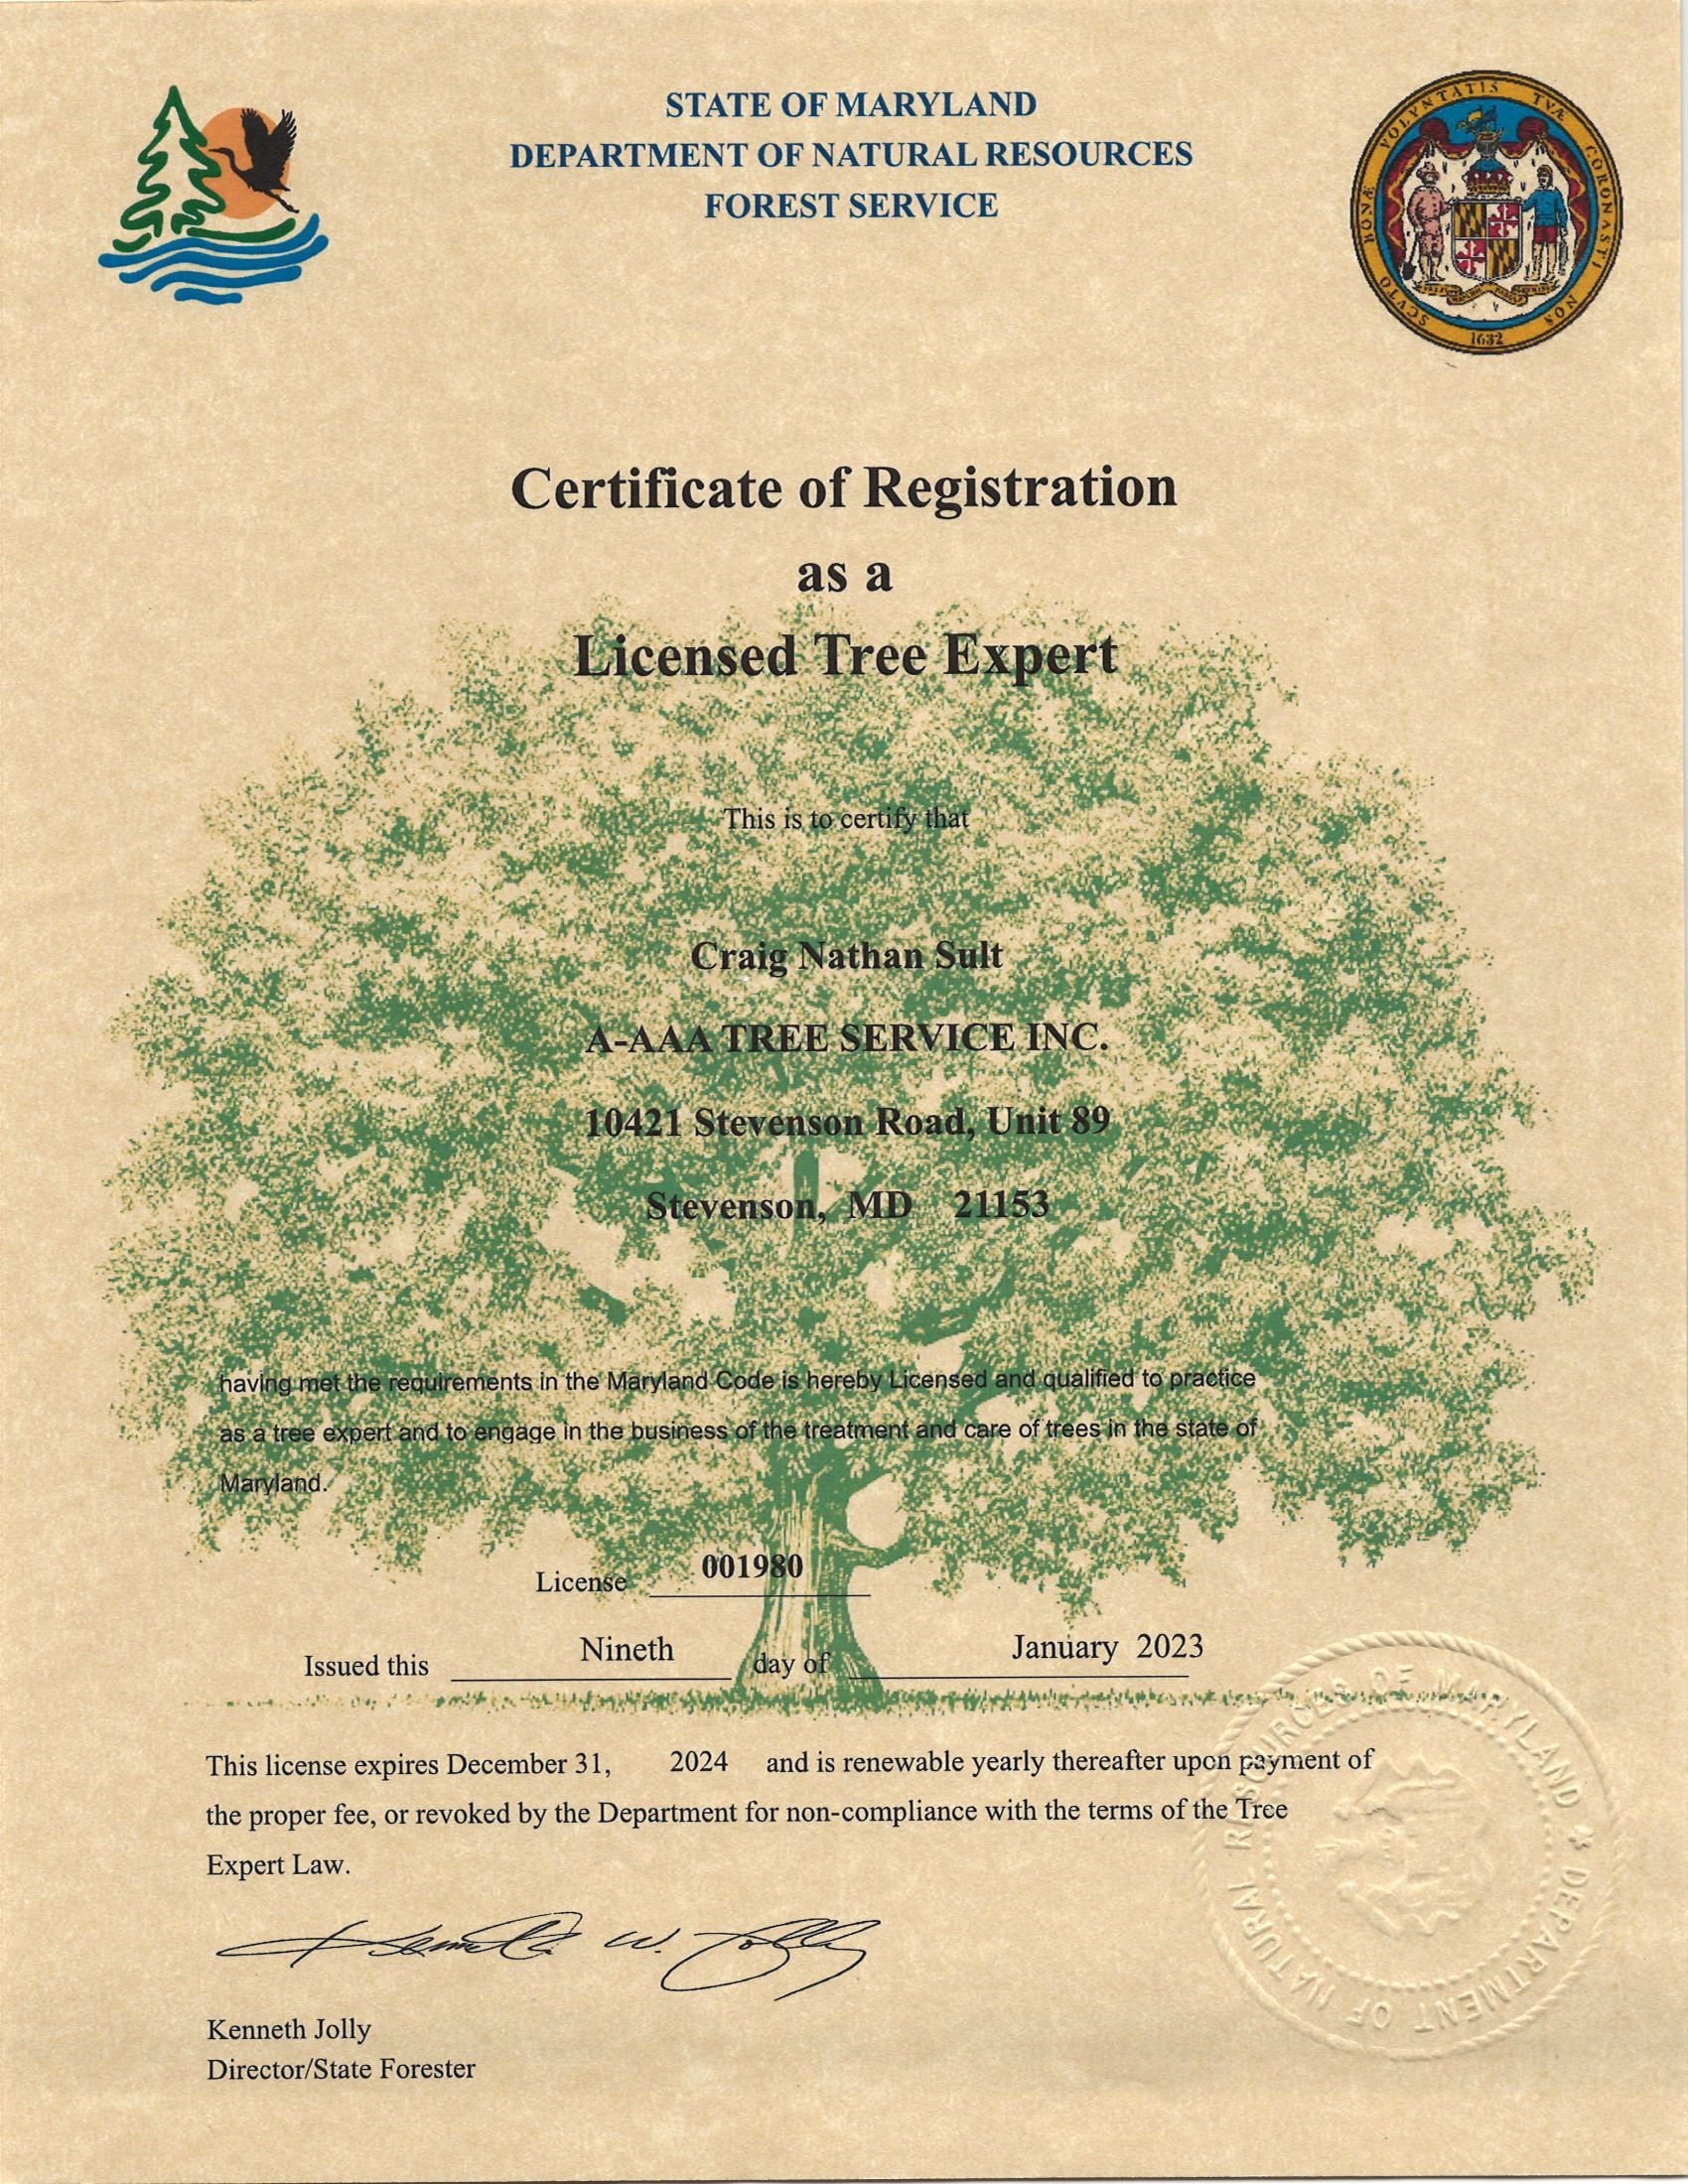 Craig NathanSult - Certificate of Registration